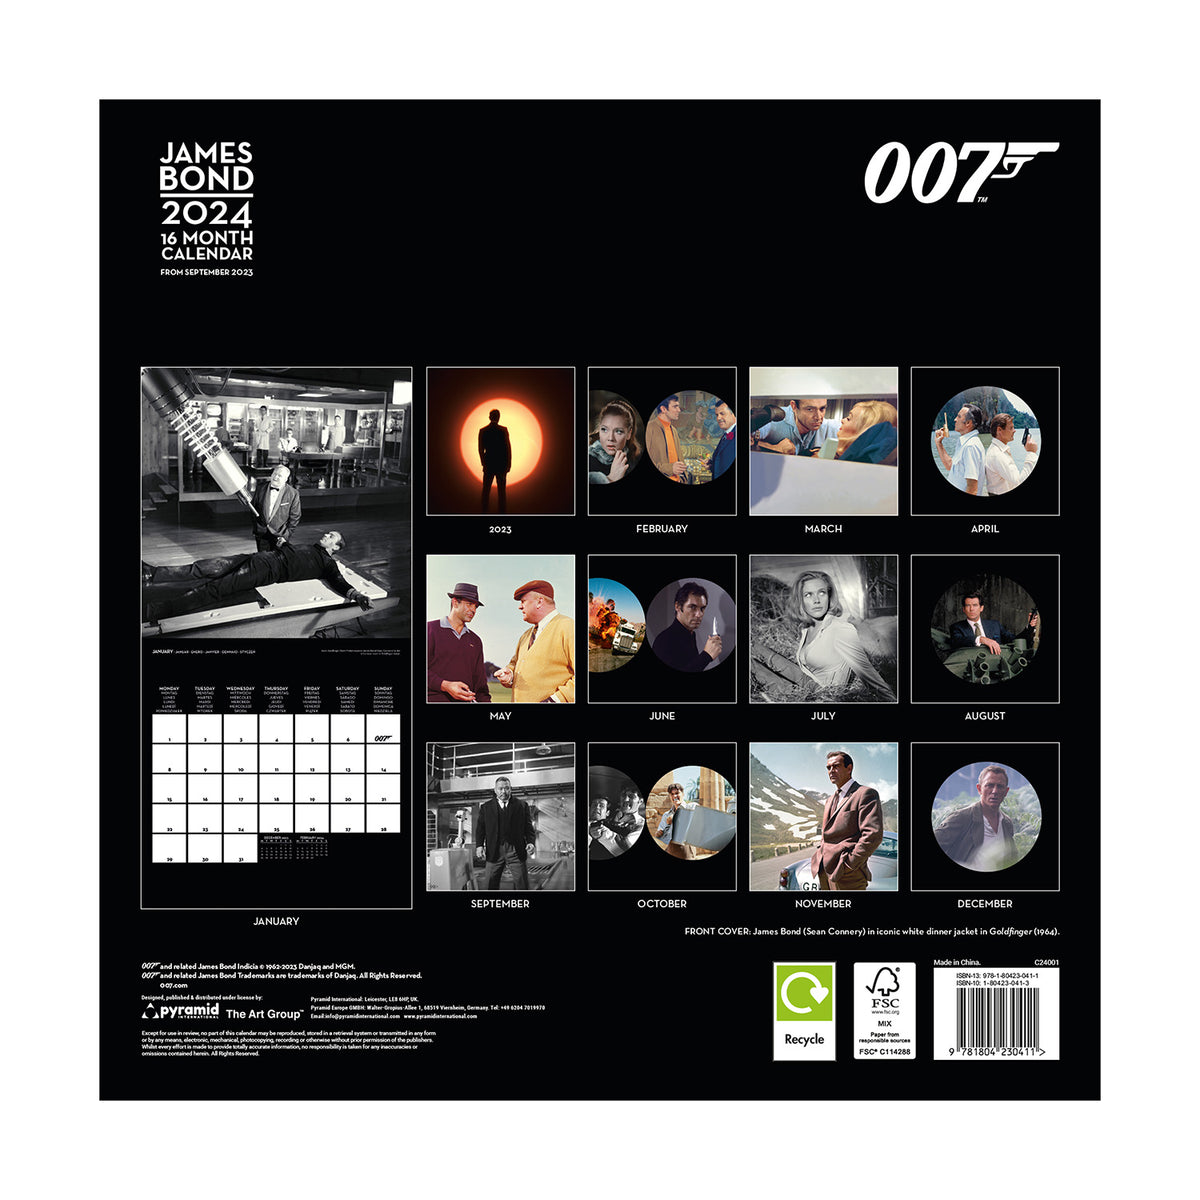 James Bond 2024 Wandkalender (Outlet-Artikel)